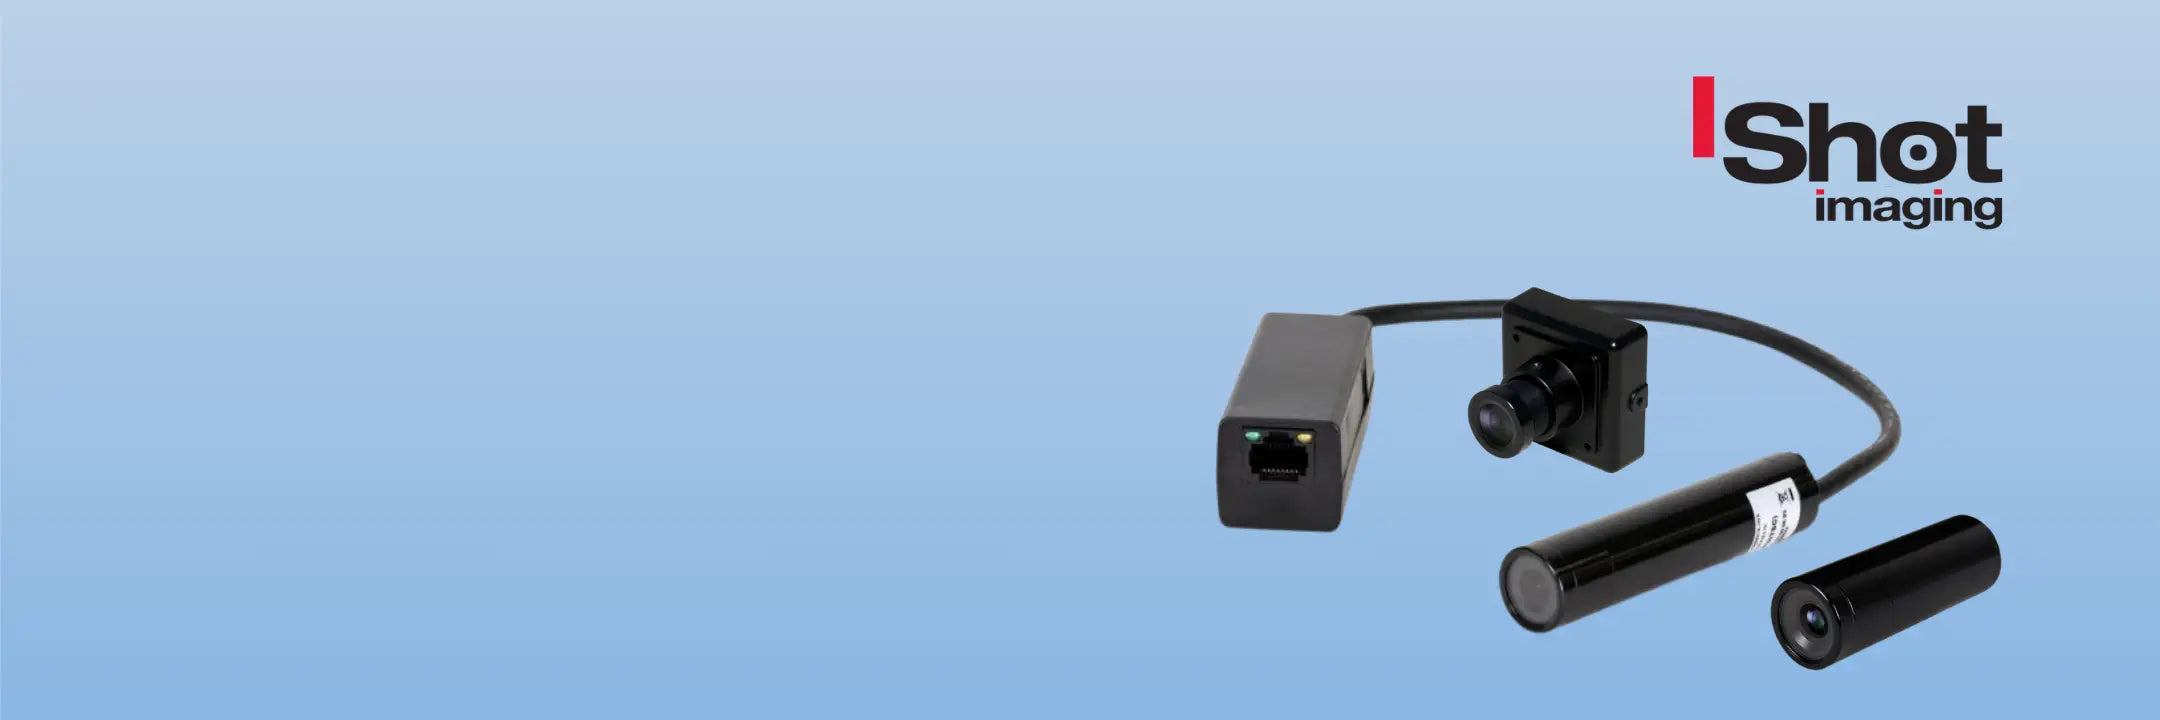 ishot miniature cameras desktop banner